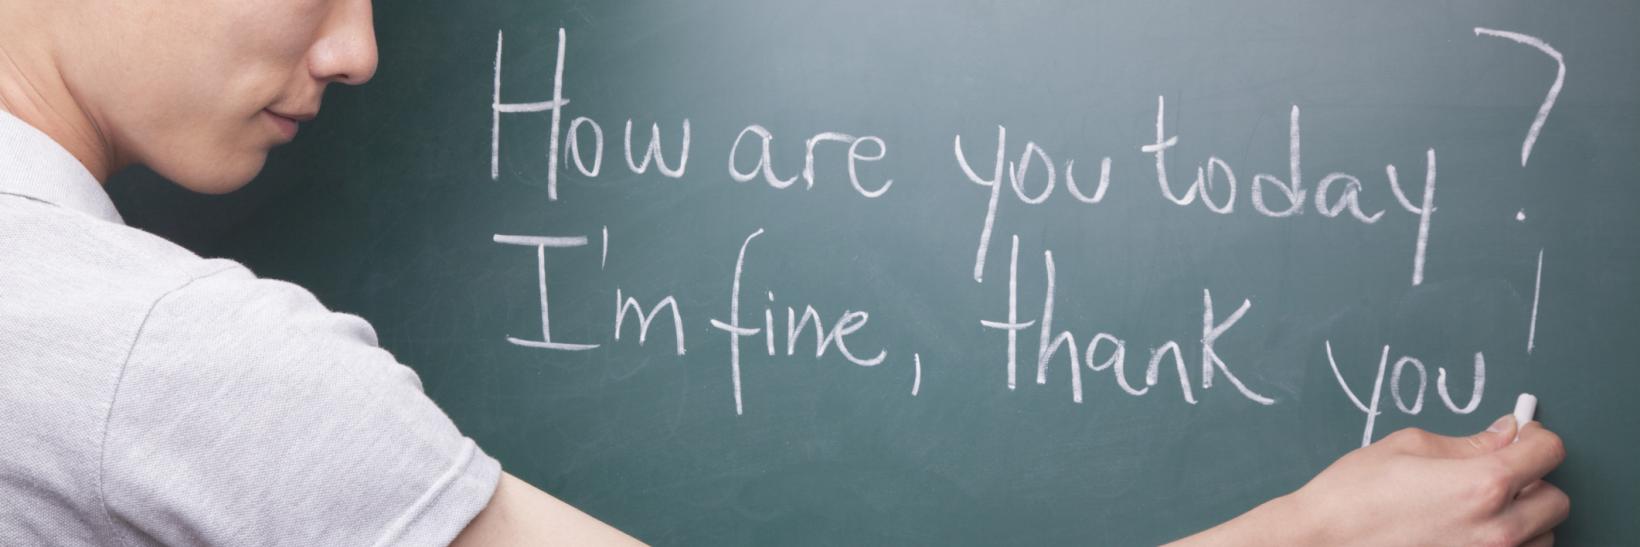 man writes English sentences on chalkboard